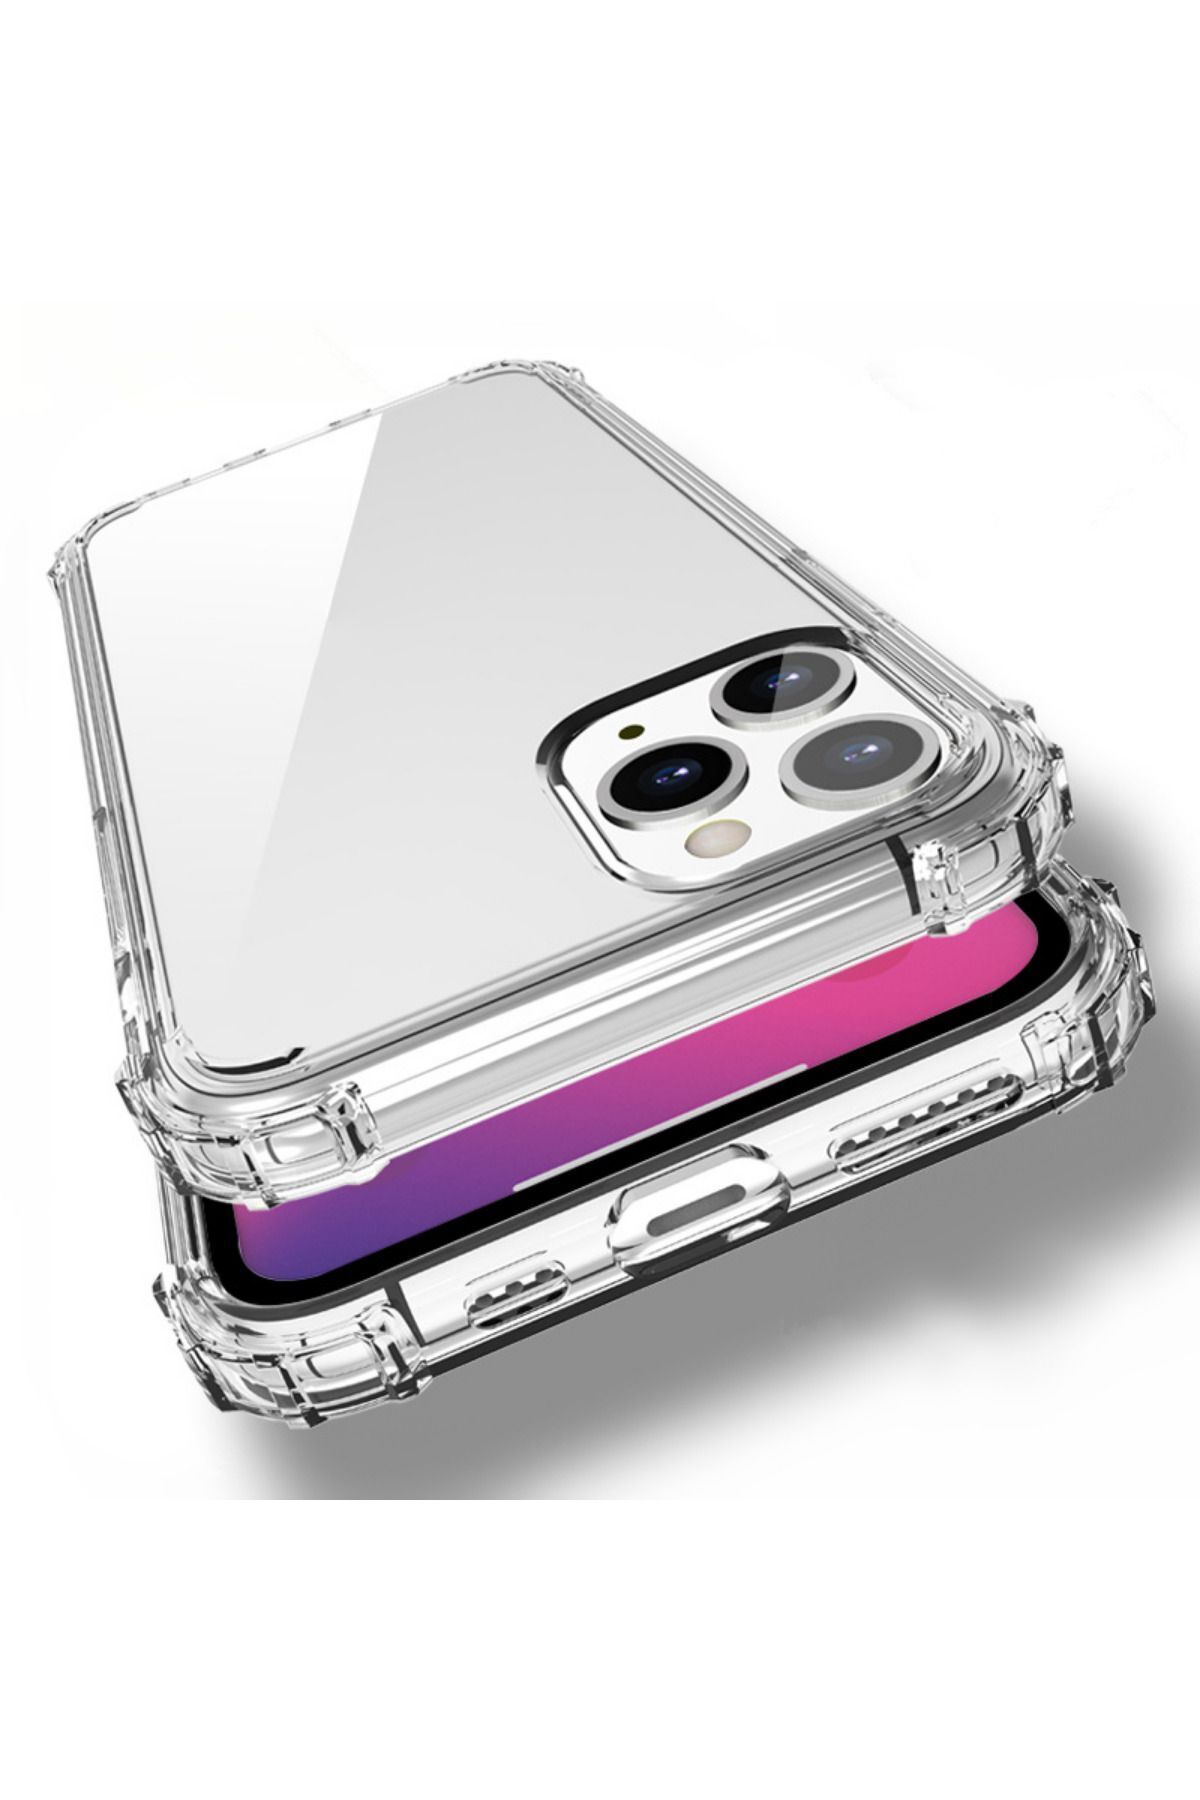 Fibaks Apple Iphone 11 Pro Max Kılıf Crystal Sert Pc Antishock Darbe Emici Kenar Şeffaf Silikon Kapak